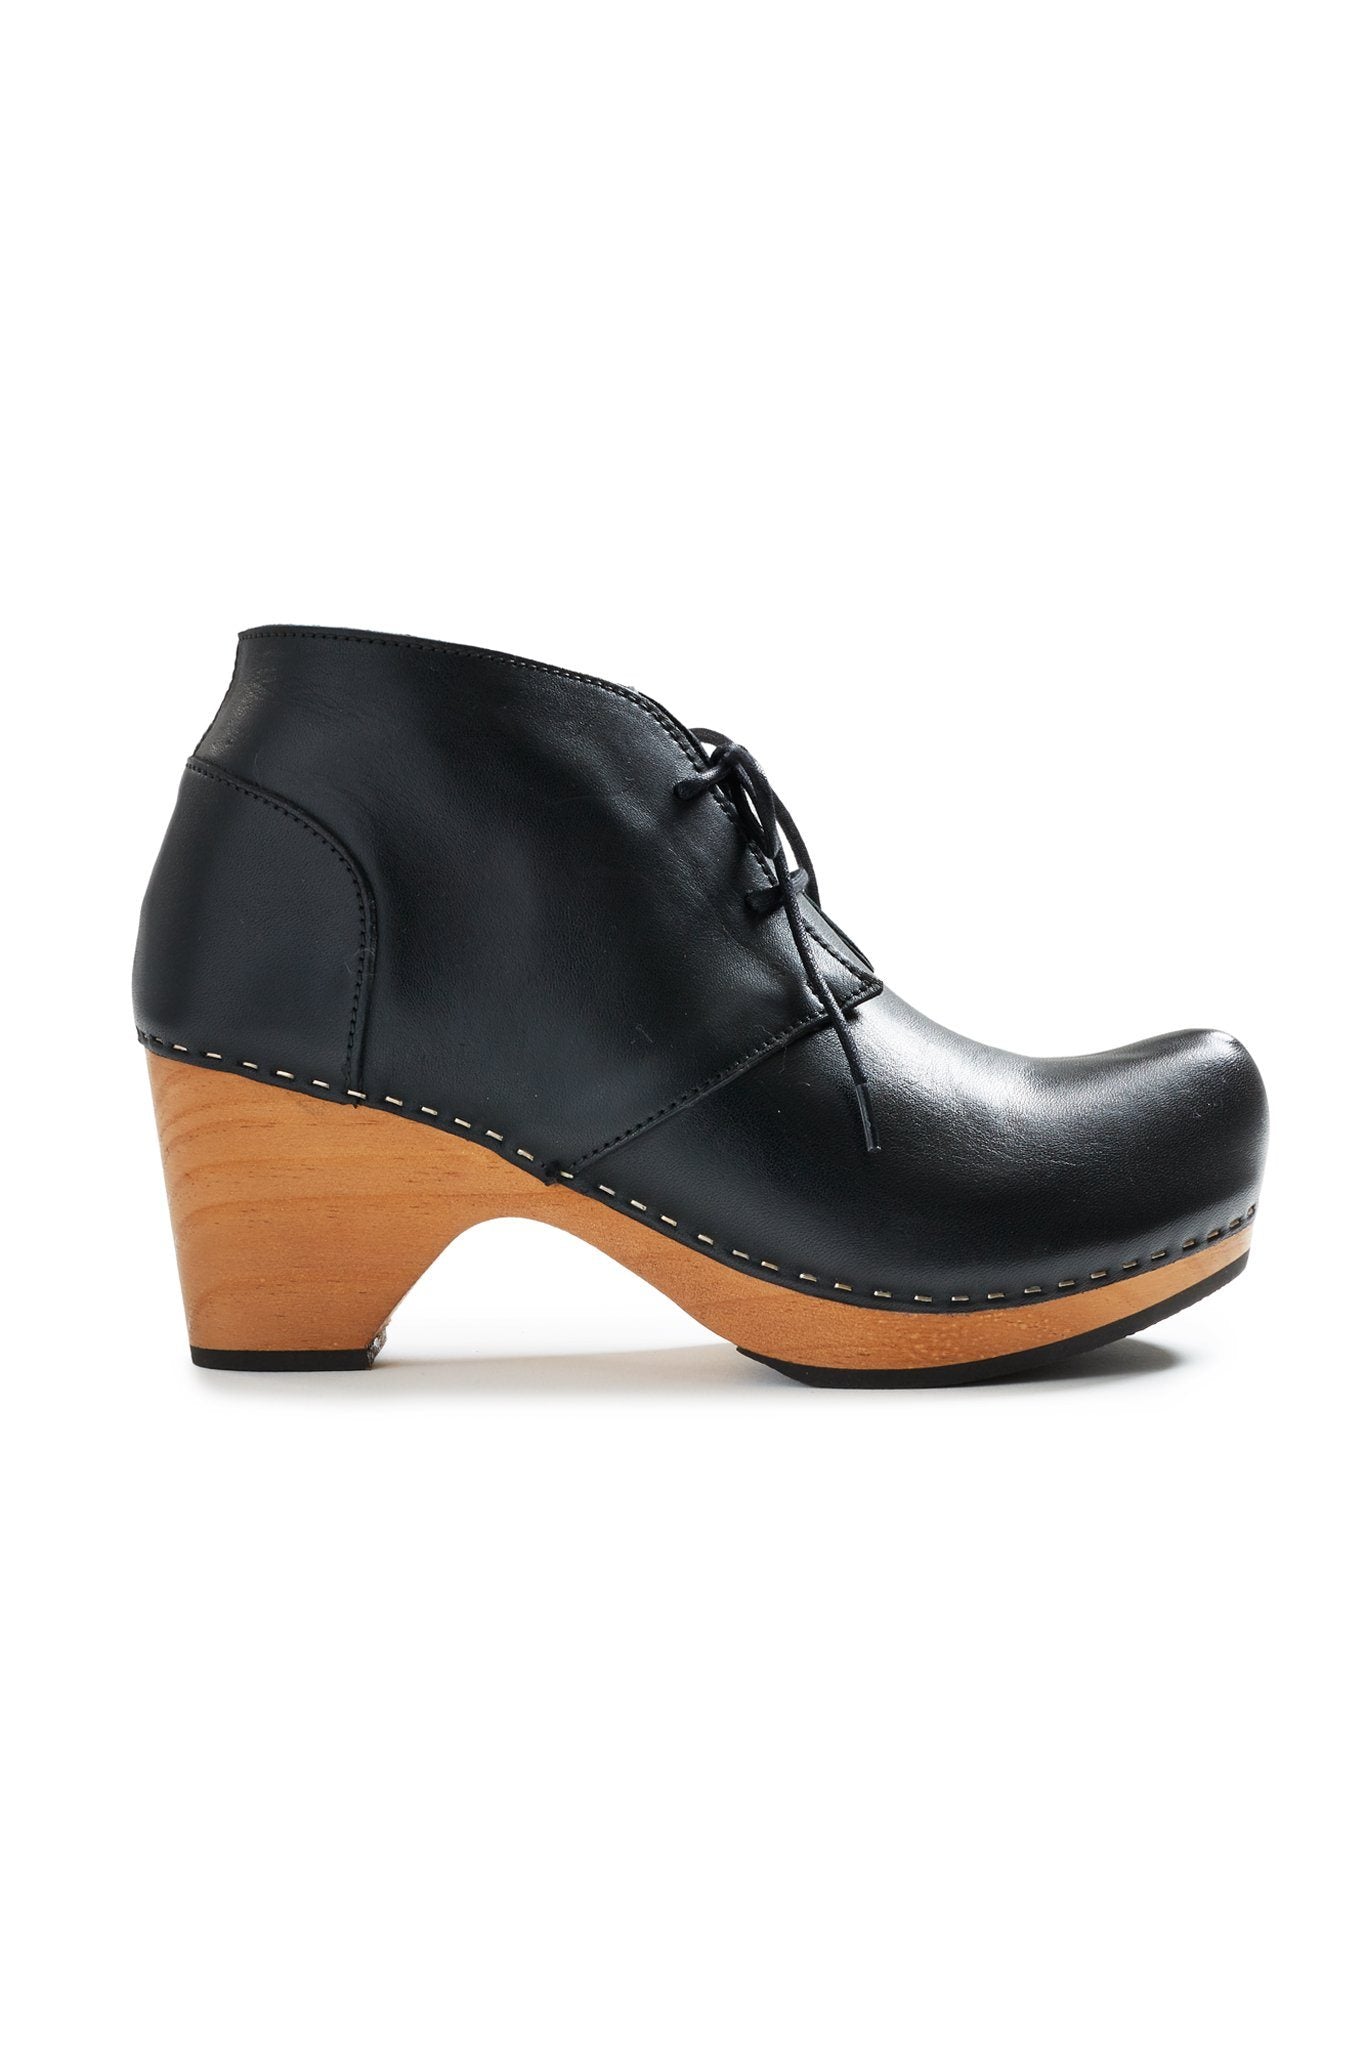 toe seam leather bootie clogs in black Clogs lisa b. black 36 (US 5.5-6) 